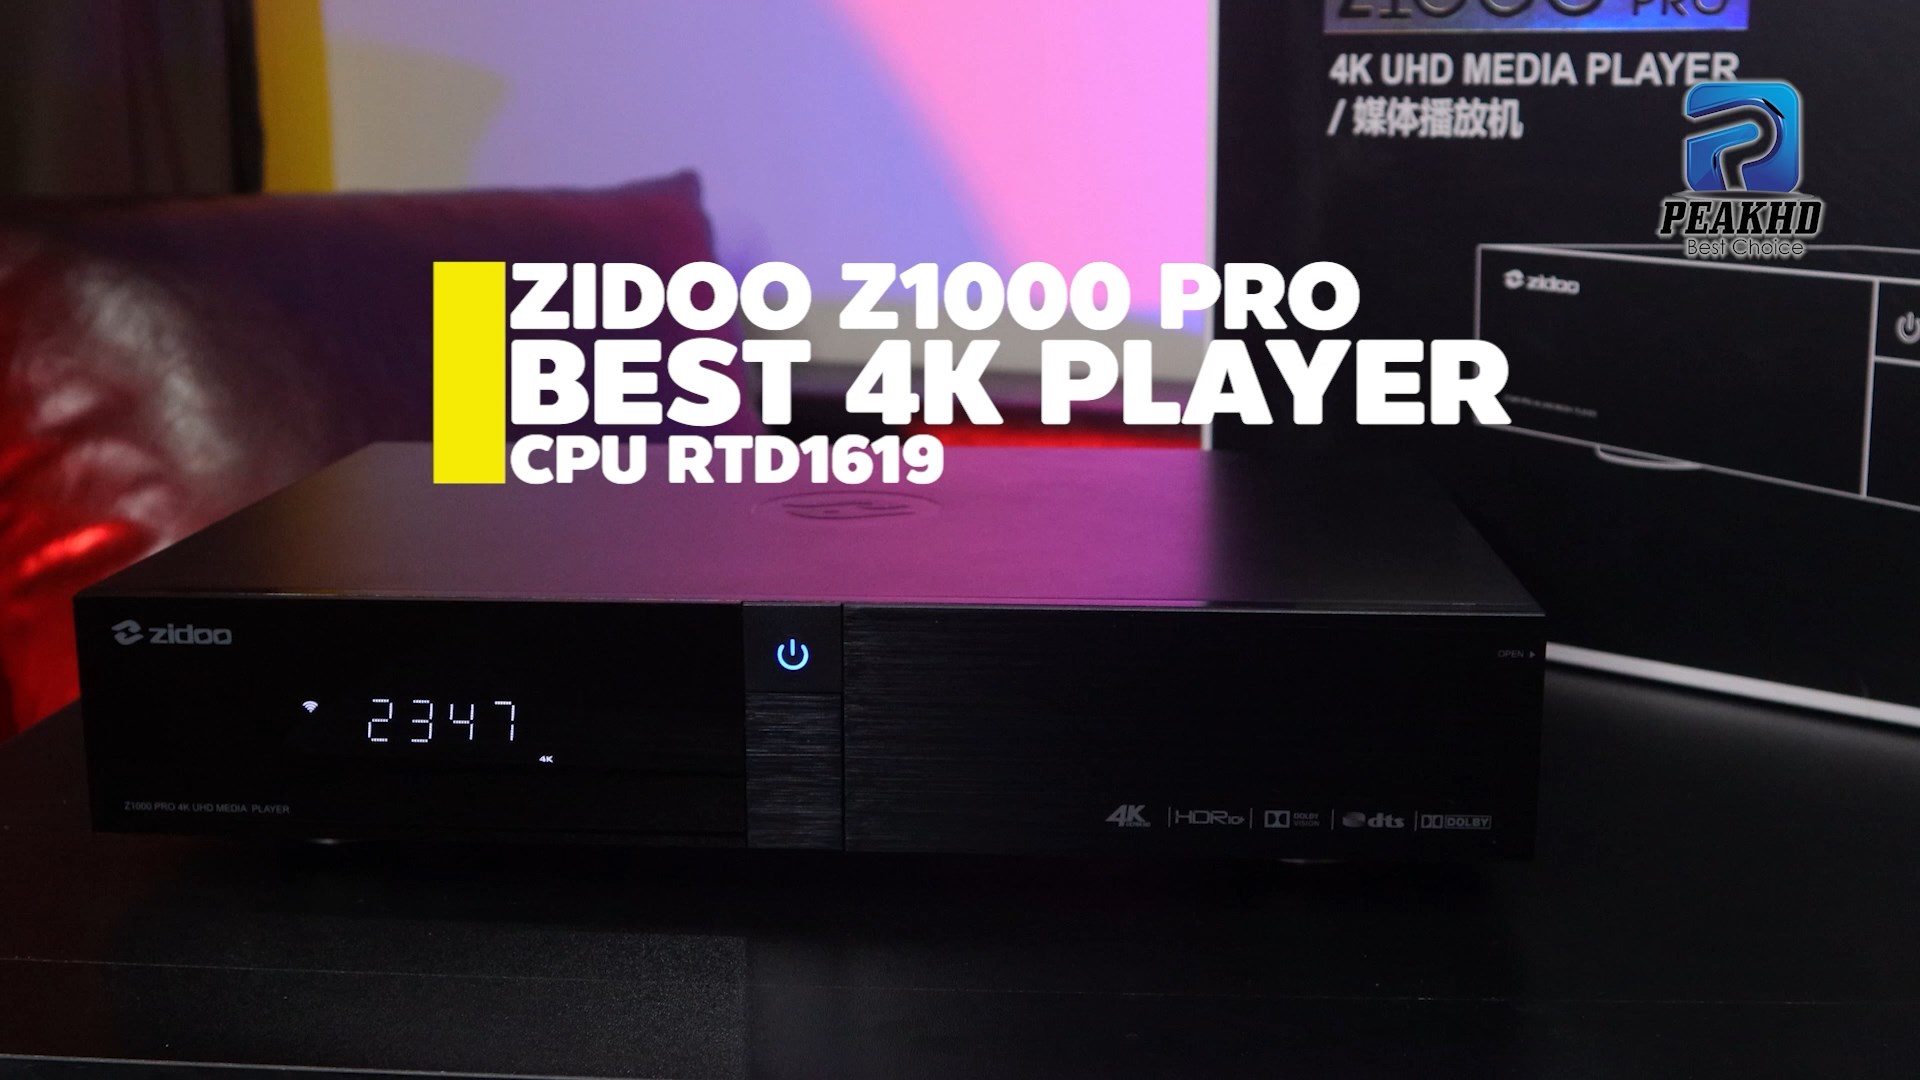 New! ZIDOO Z1000 Pro ปี 2020 Realtek 1619 มาแล้ว! พร้อม Drives Power คุณภาพ HD PLAYER 4K ปี 2020 ล่าสุดจาก Zidoo